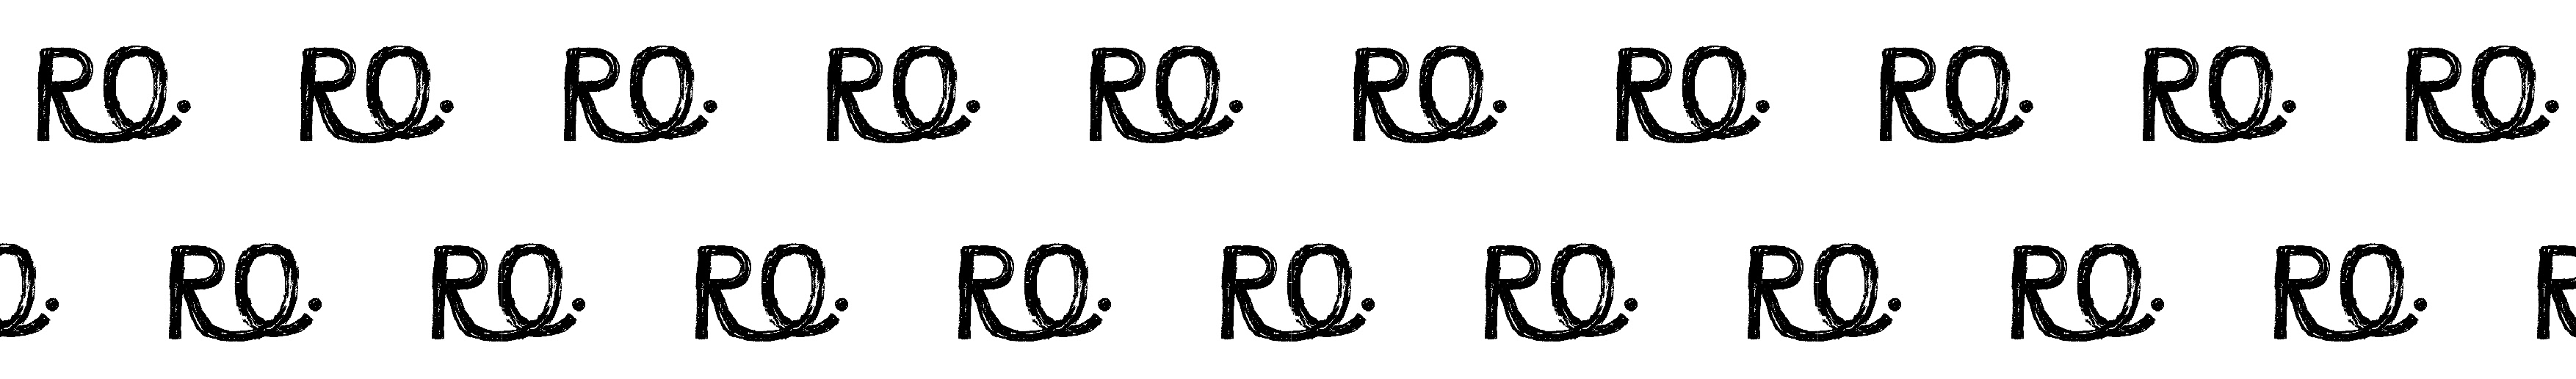 Баннер профиля RO Designs